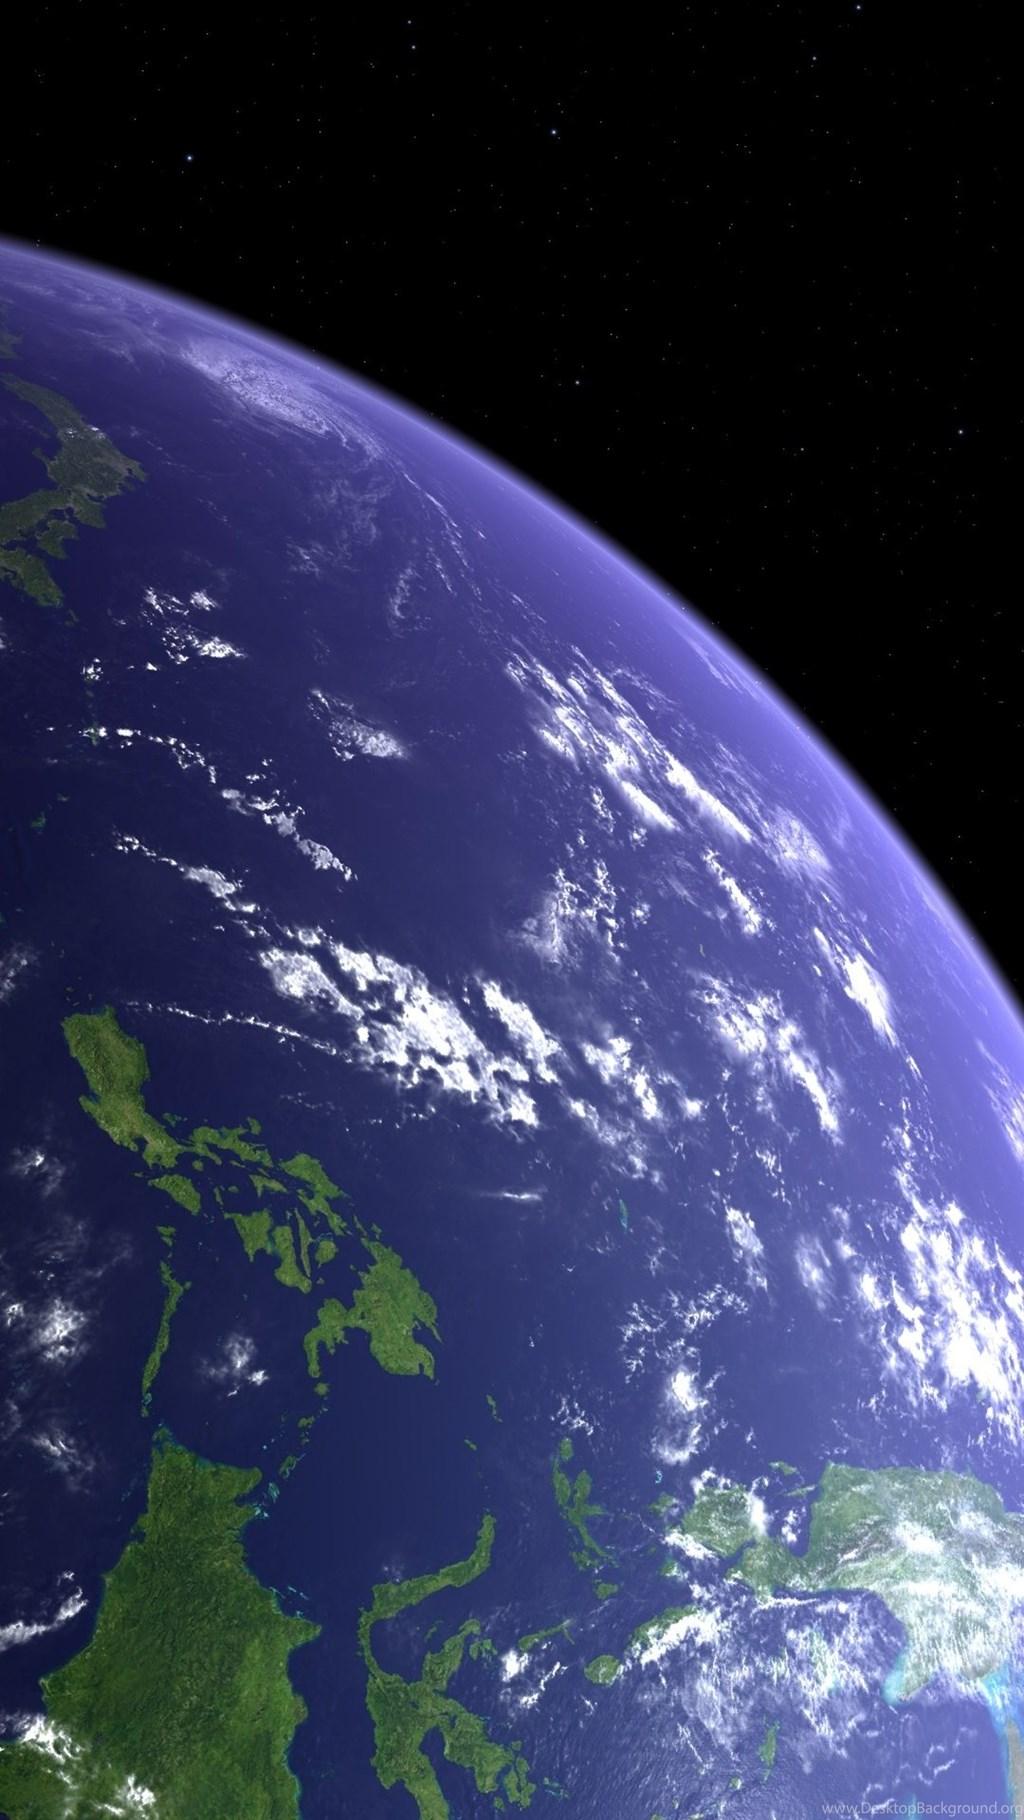 Planet Earth Orbital View iPhone 6 Plus HD Wallpaper / IPod